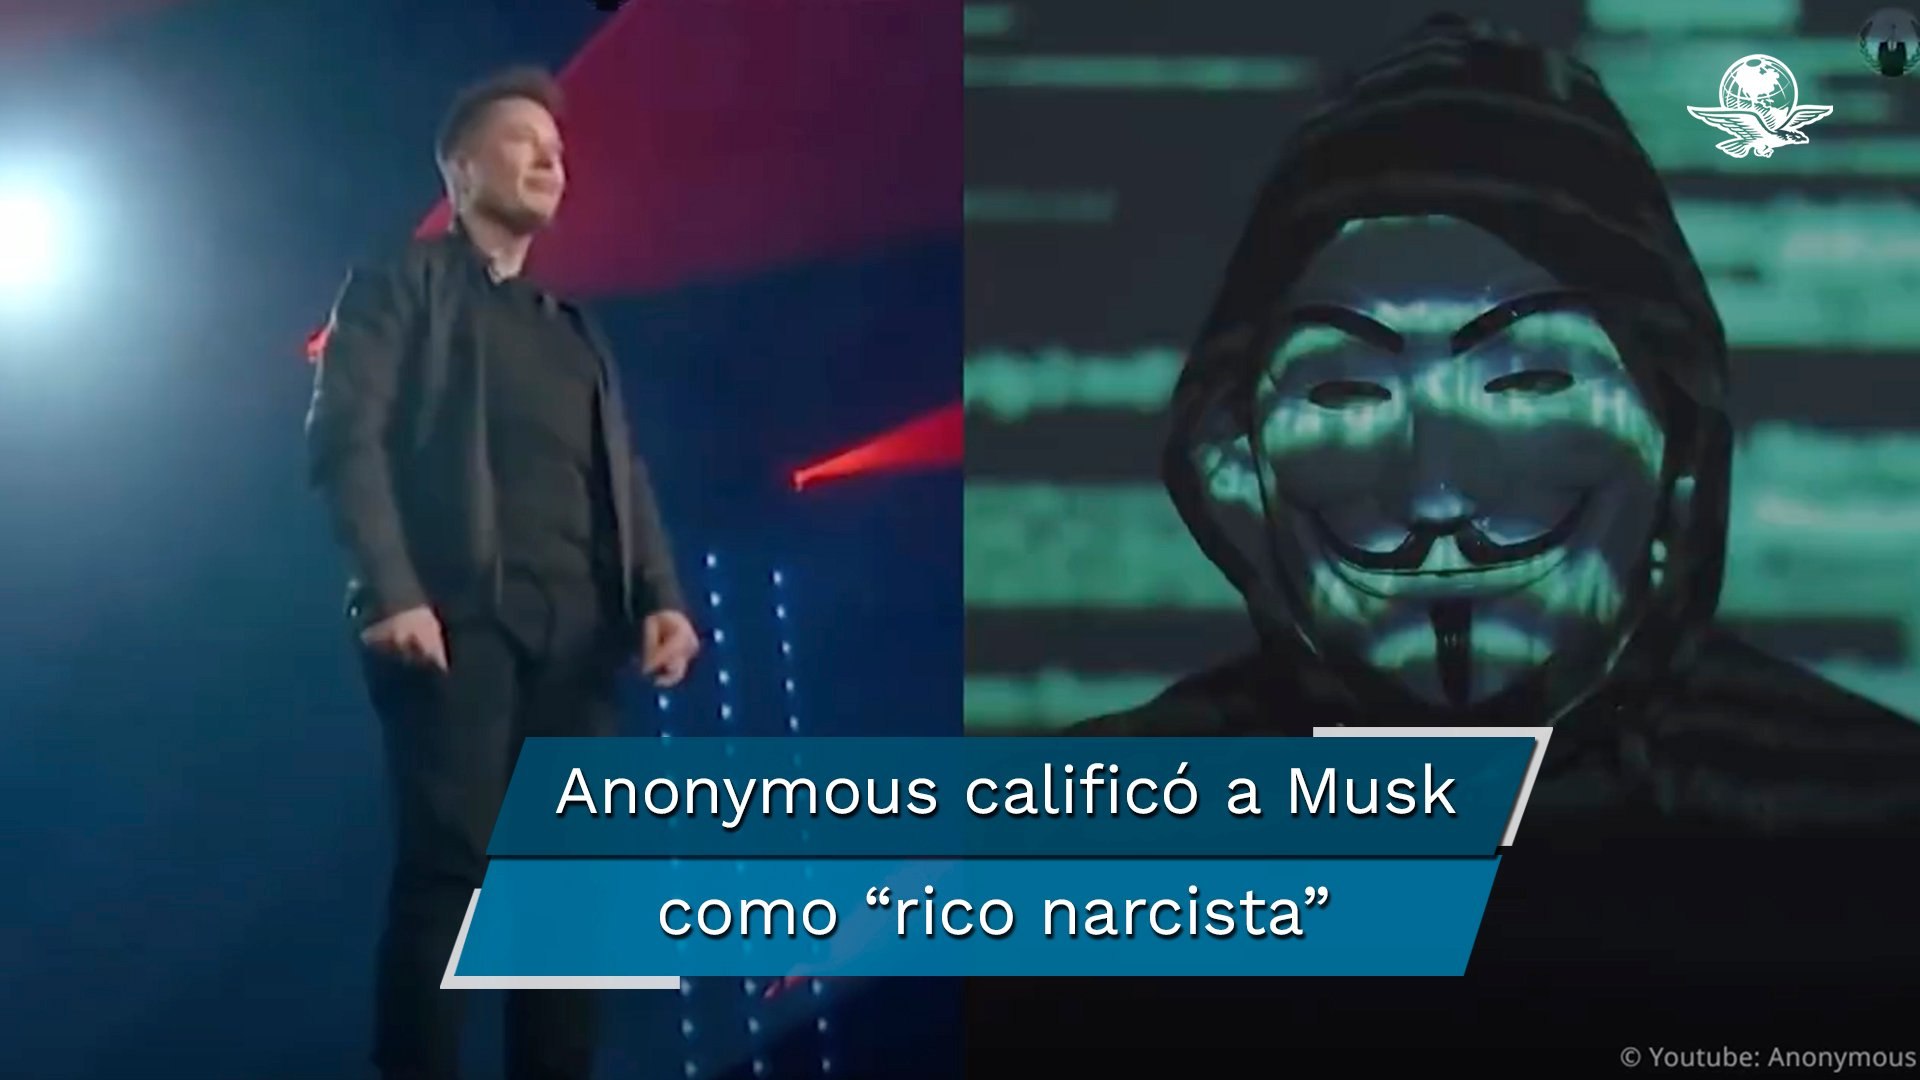 Anonymous encara a Elon Musk